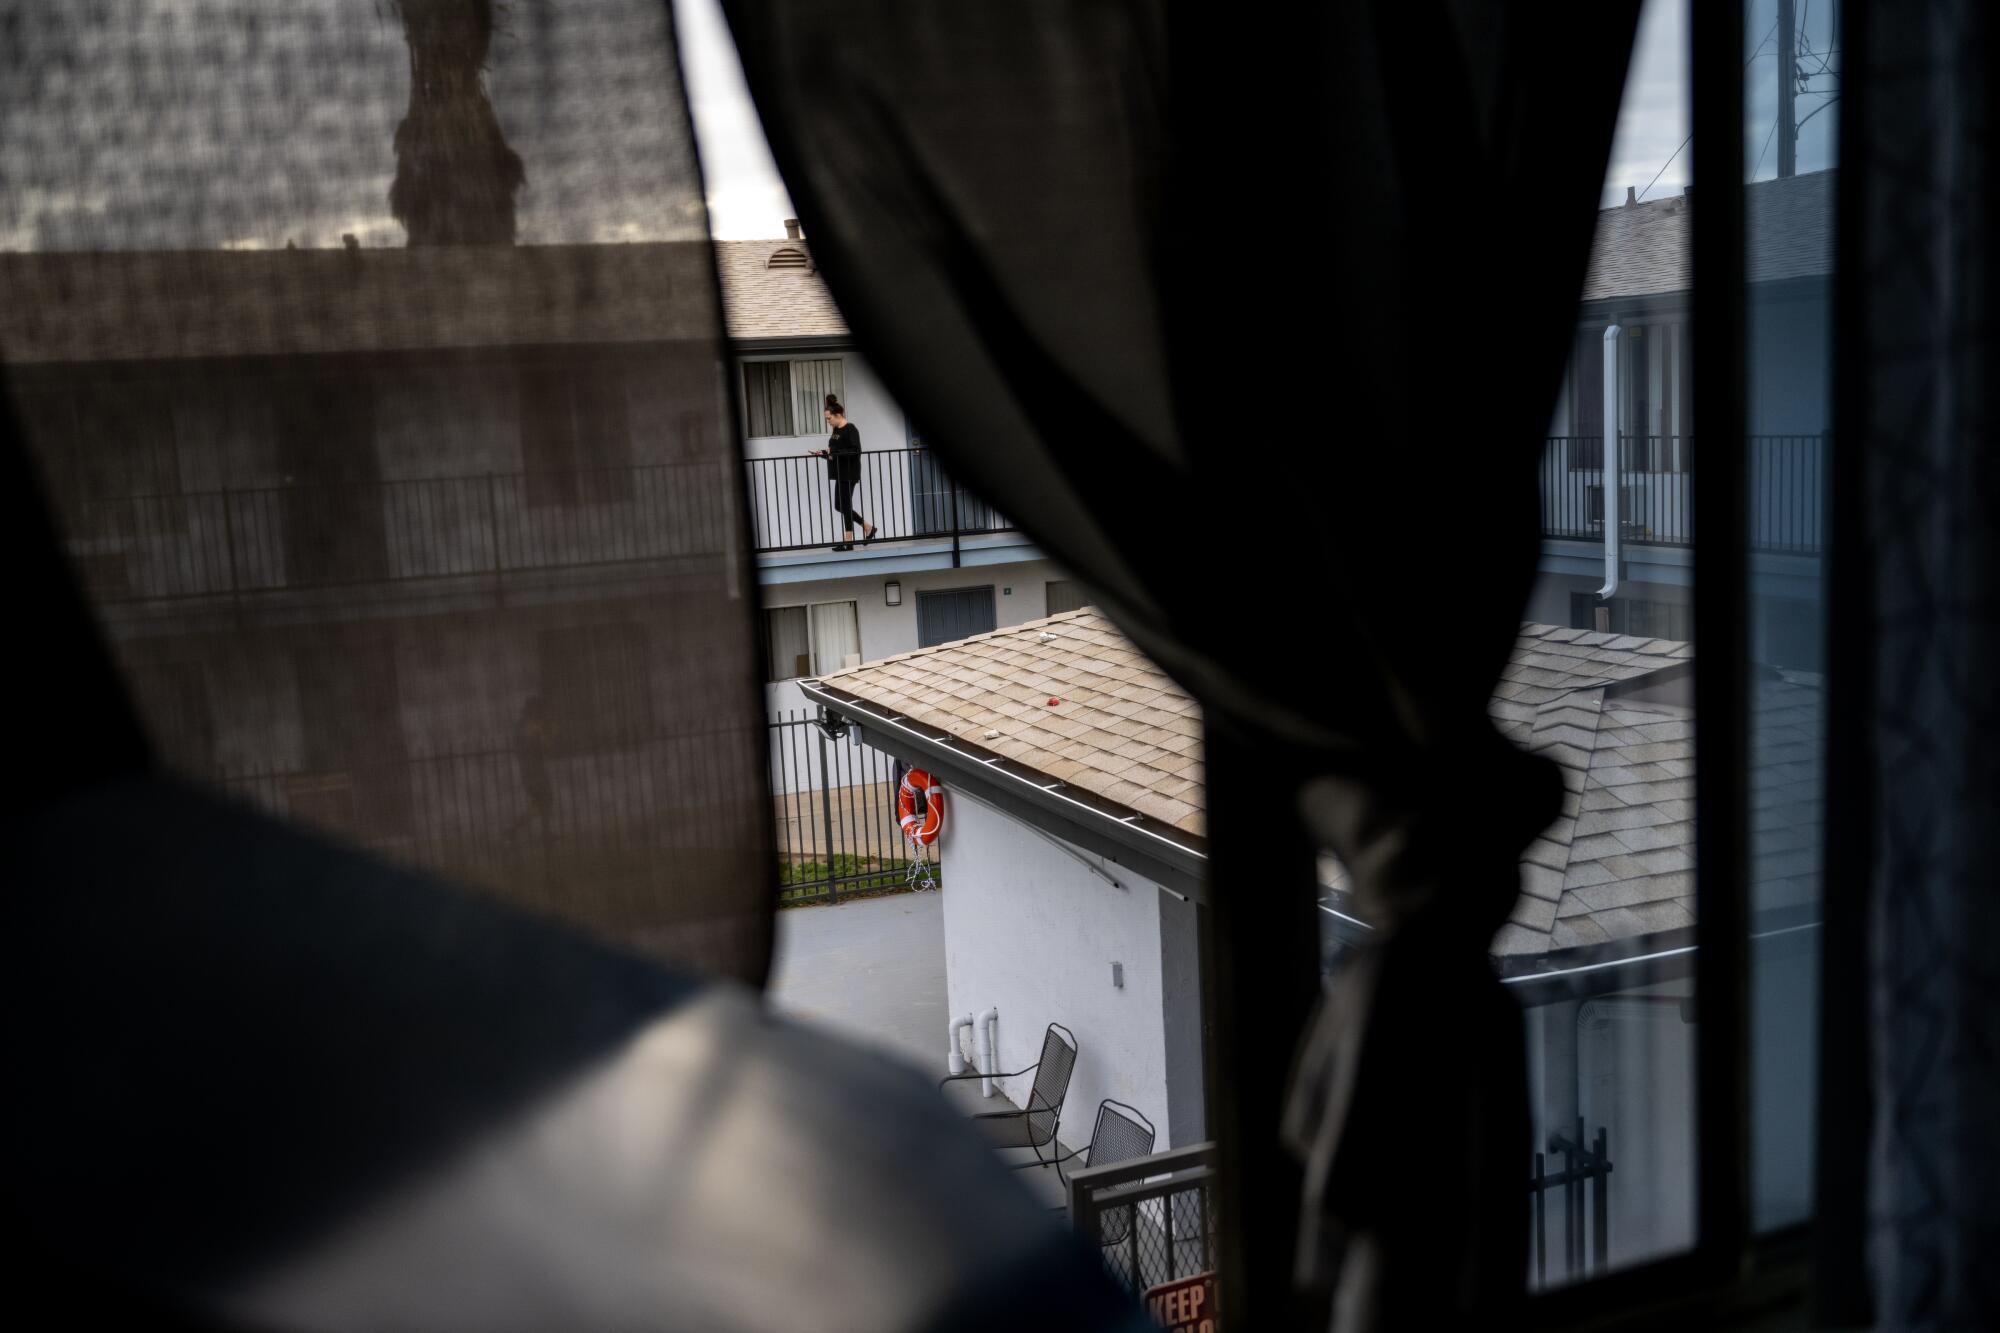 A person walks along a second floor balcony.